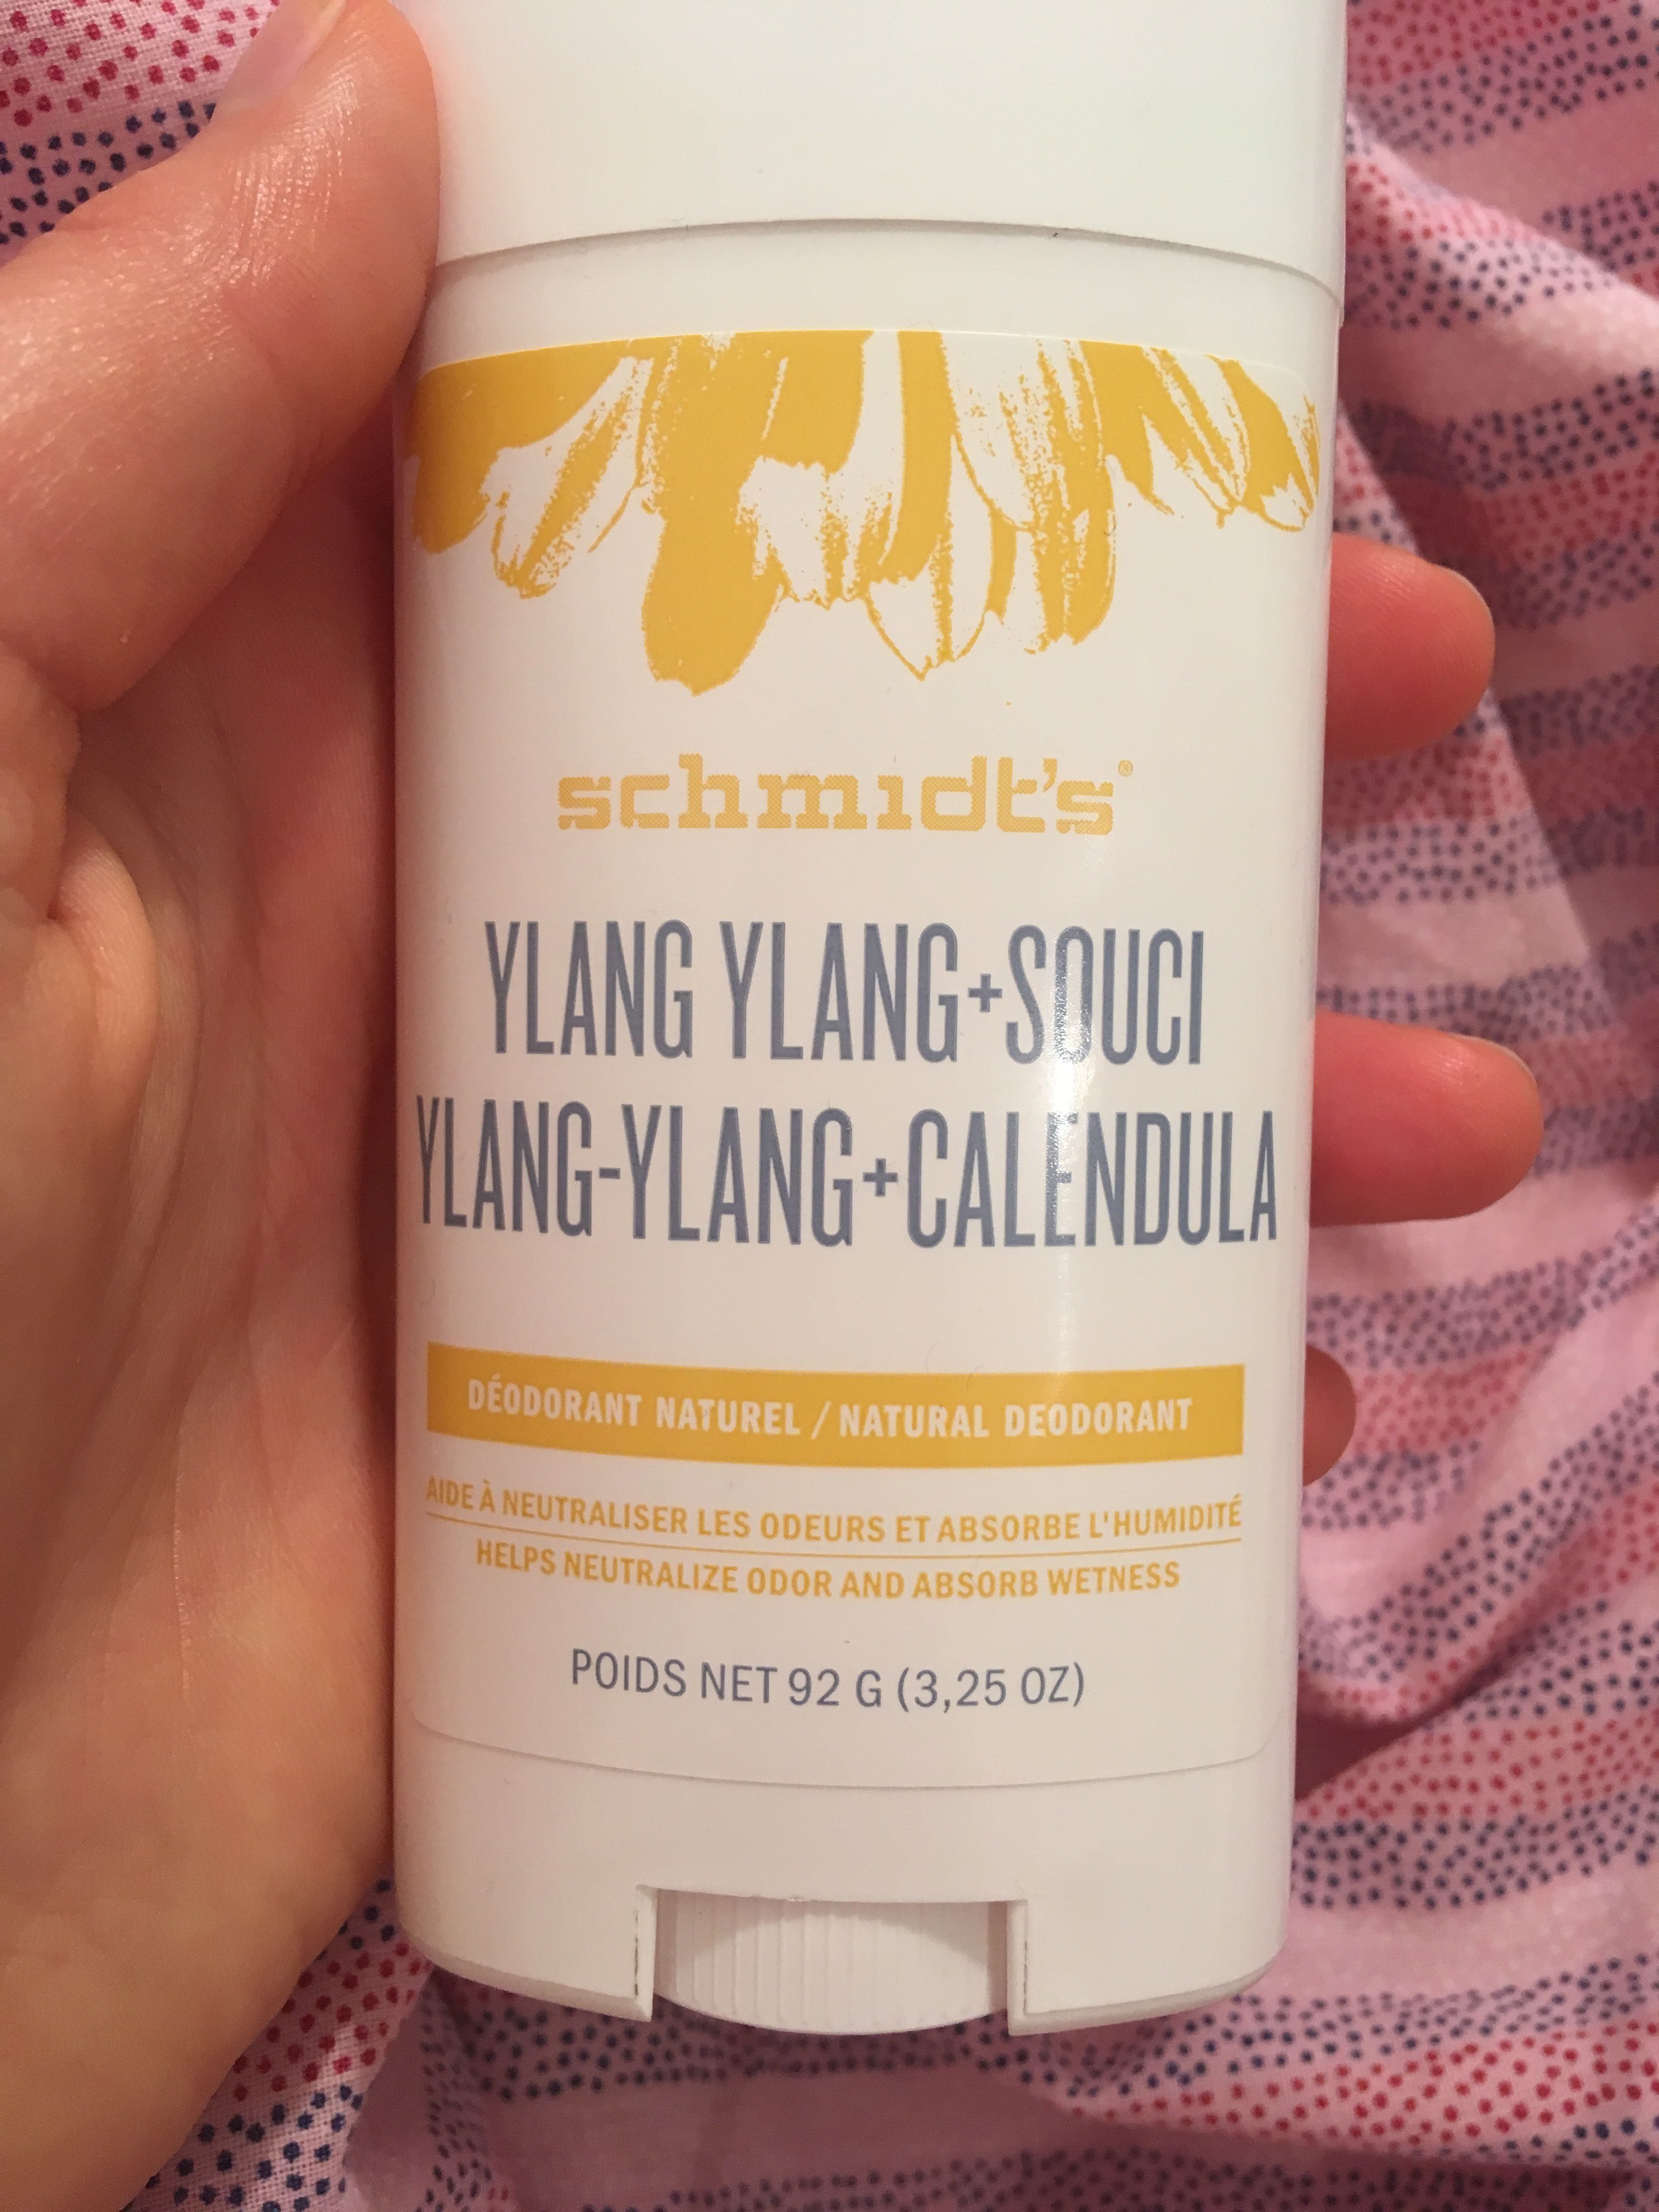 Ylang-Ylang + Calendula Deodorant naturel - Product - fr